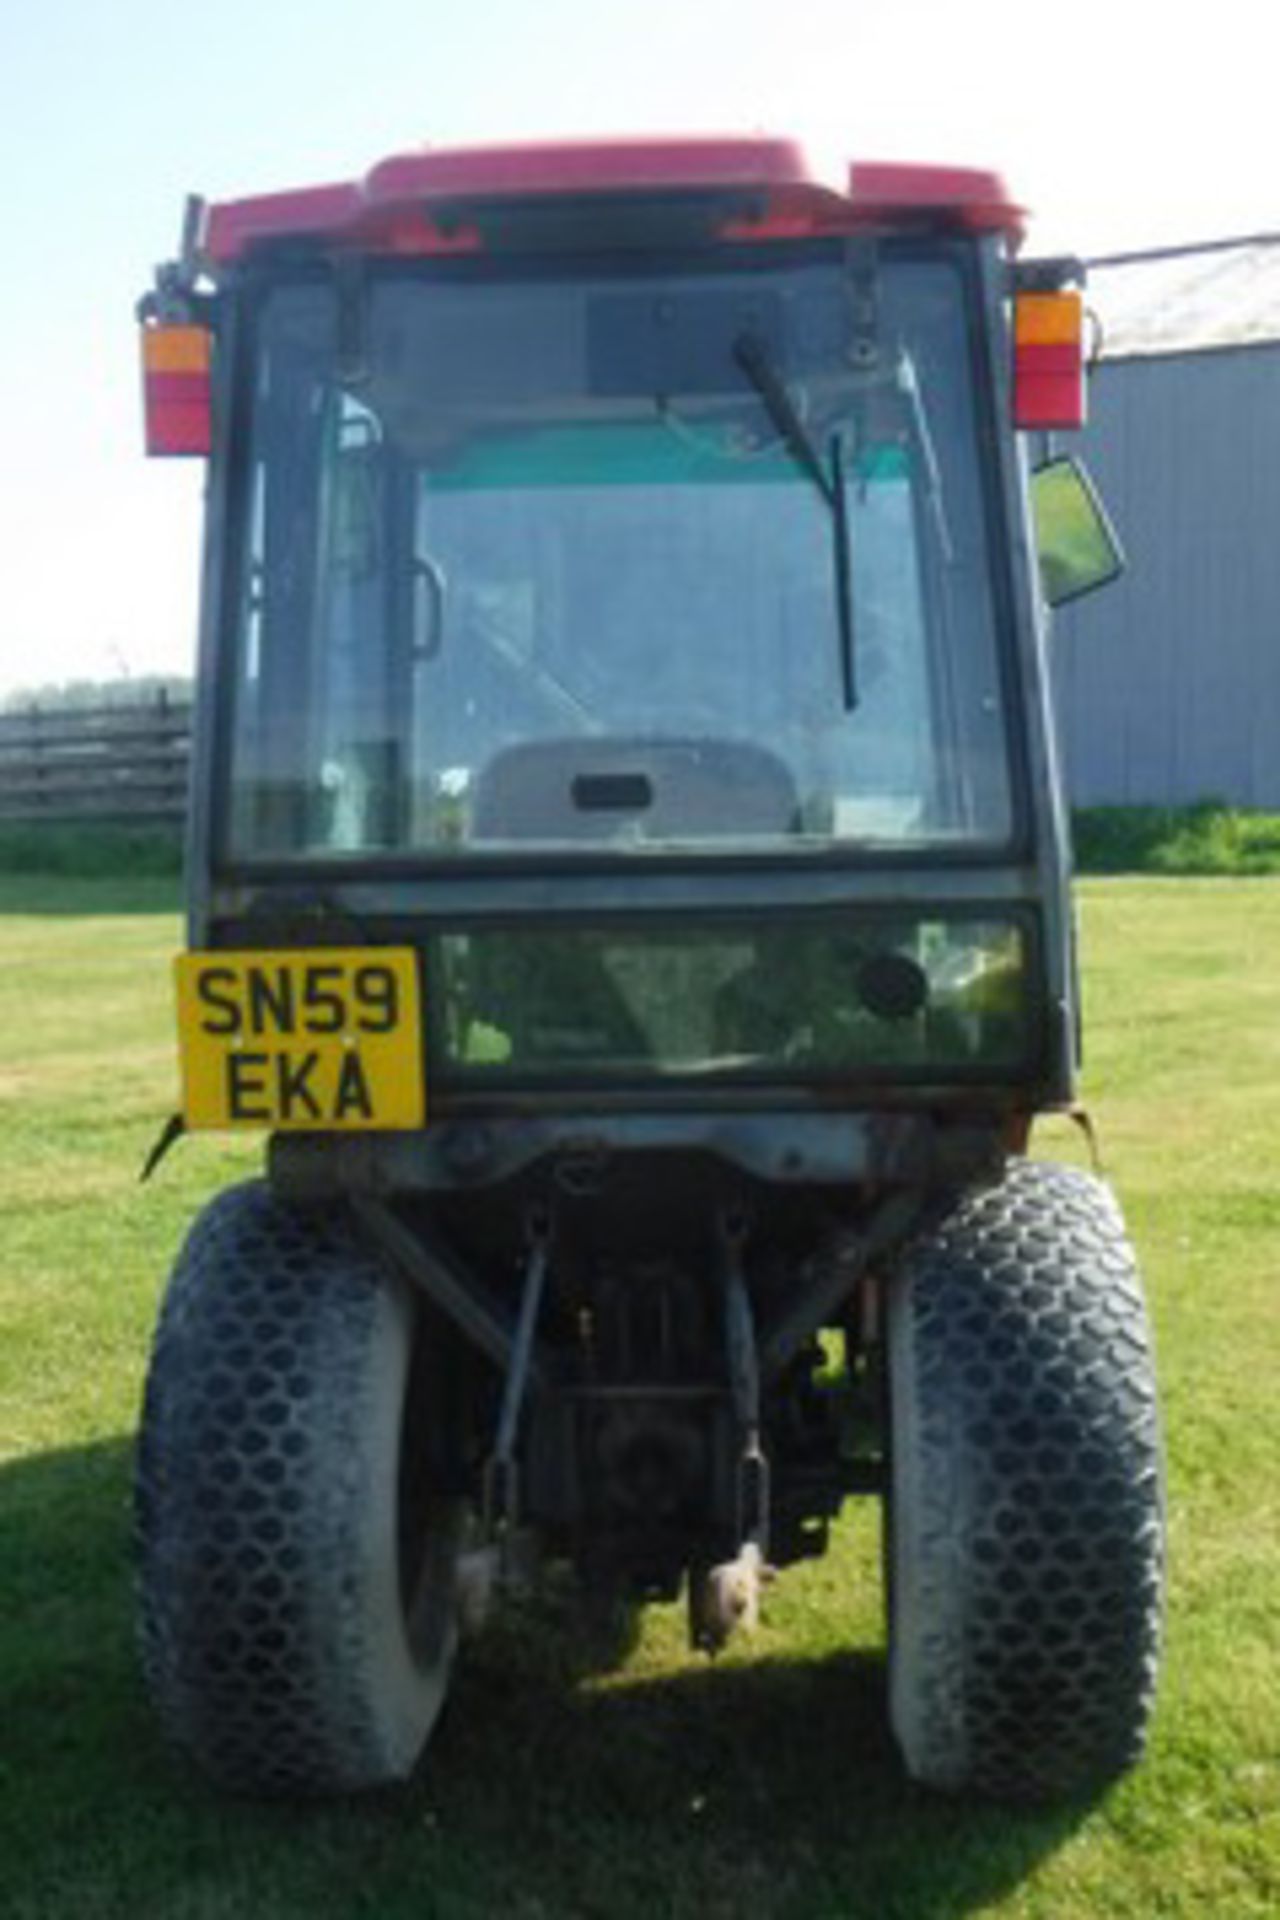 2009 KUBOTA 2530 Mini Tractor - Reg No SN59 EKA. 789hrs (not verified) - Image 11 of 15